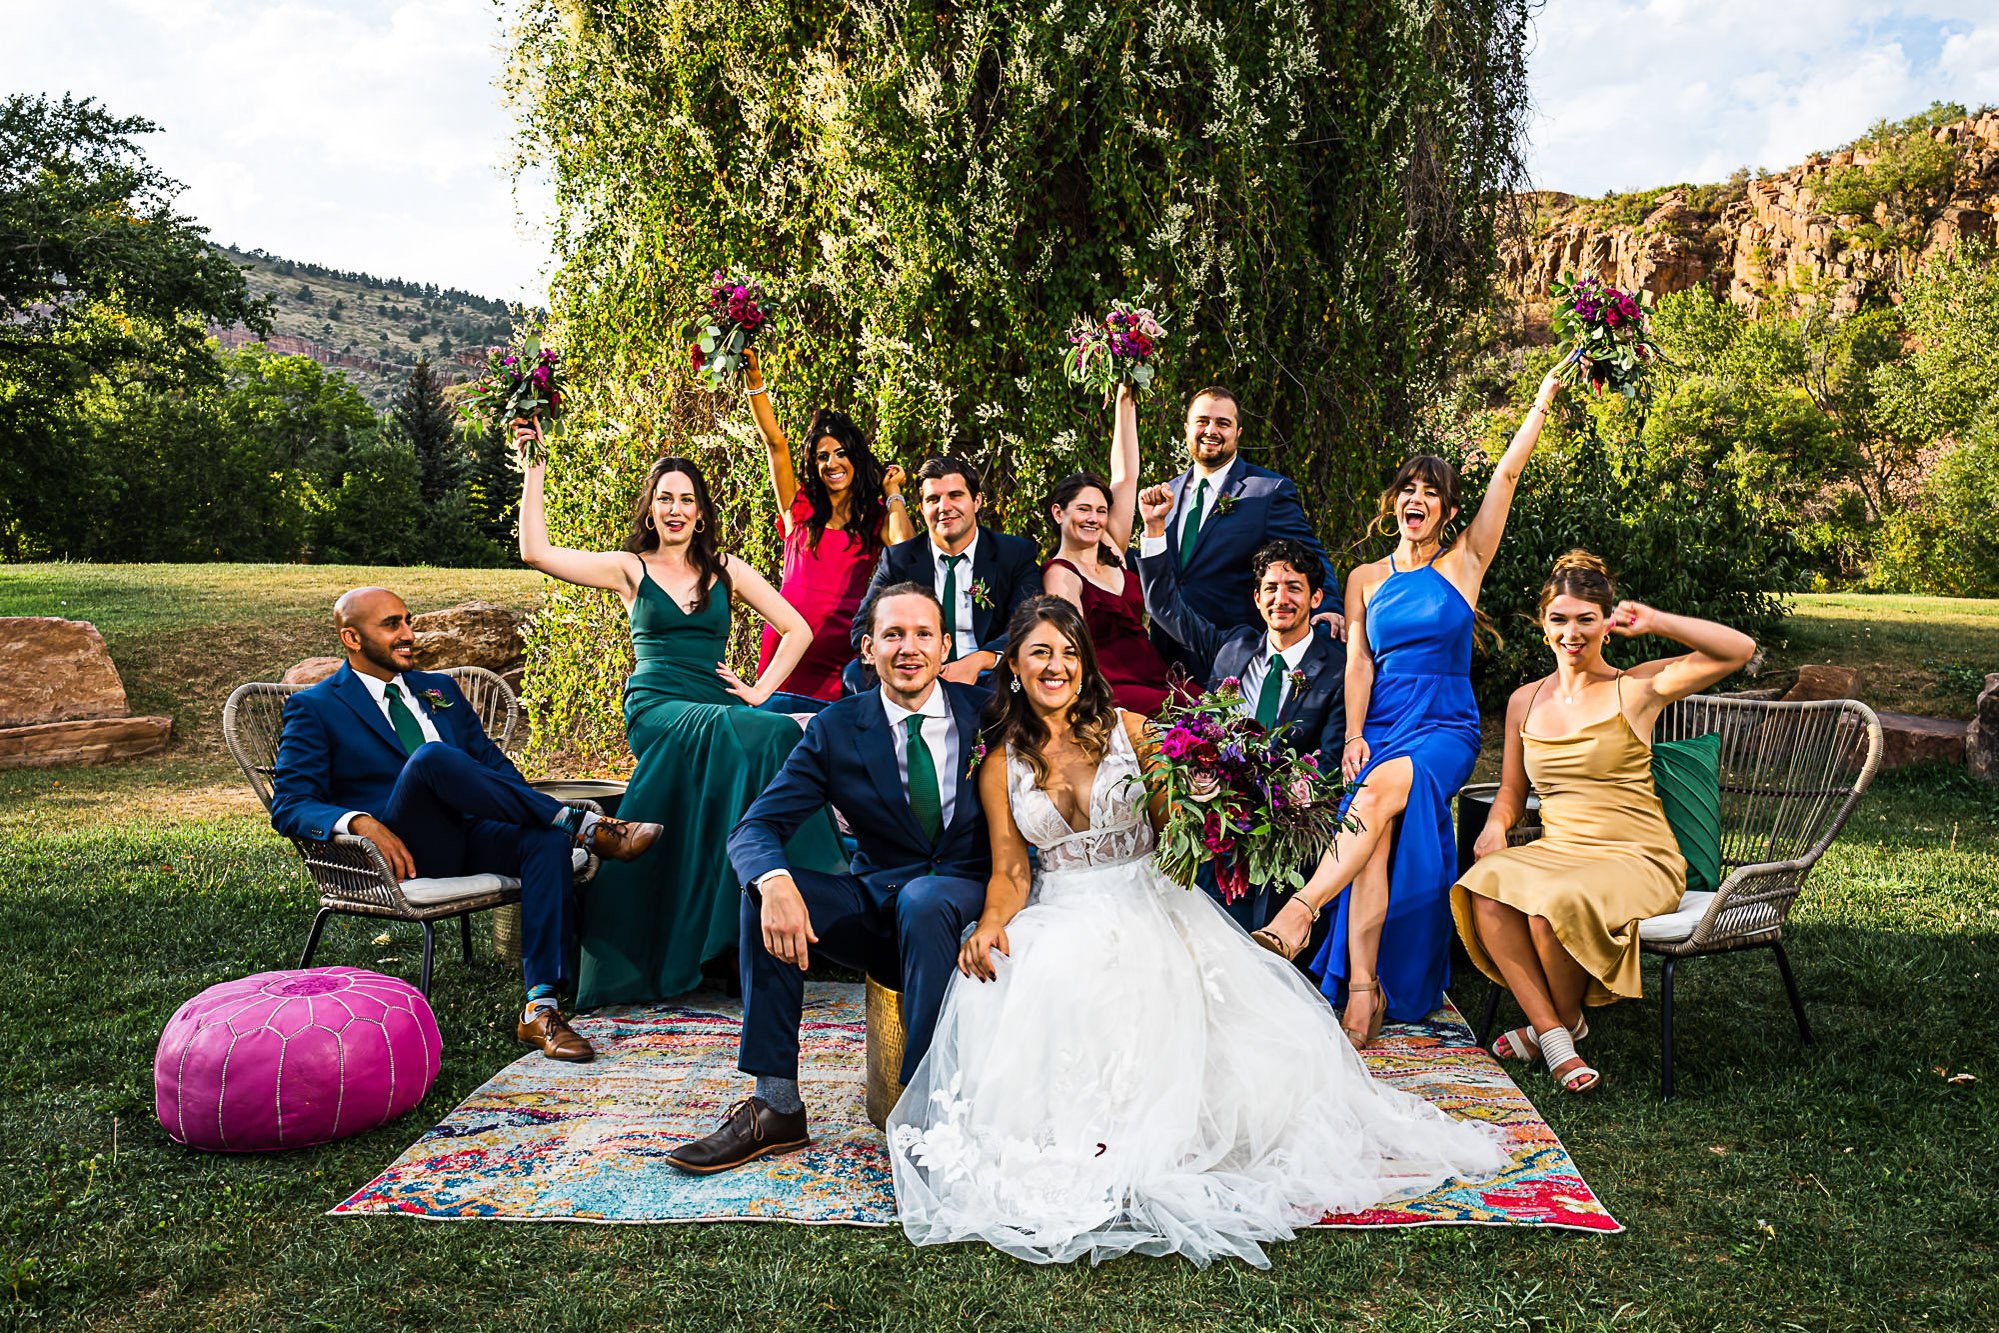 planet-bluegrass-lyons-colorado-summer-electric-forest-wedding-dramatic-photographer 7-2.jpg